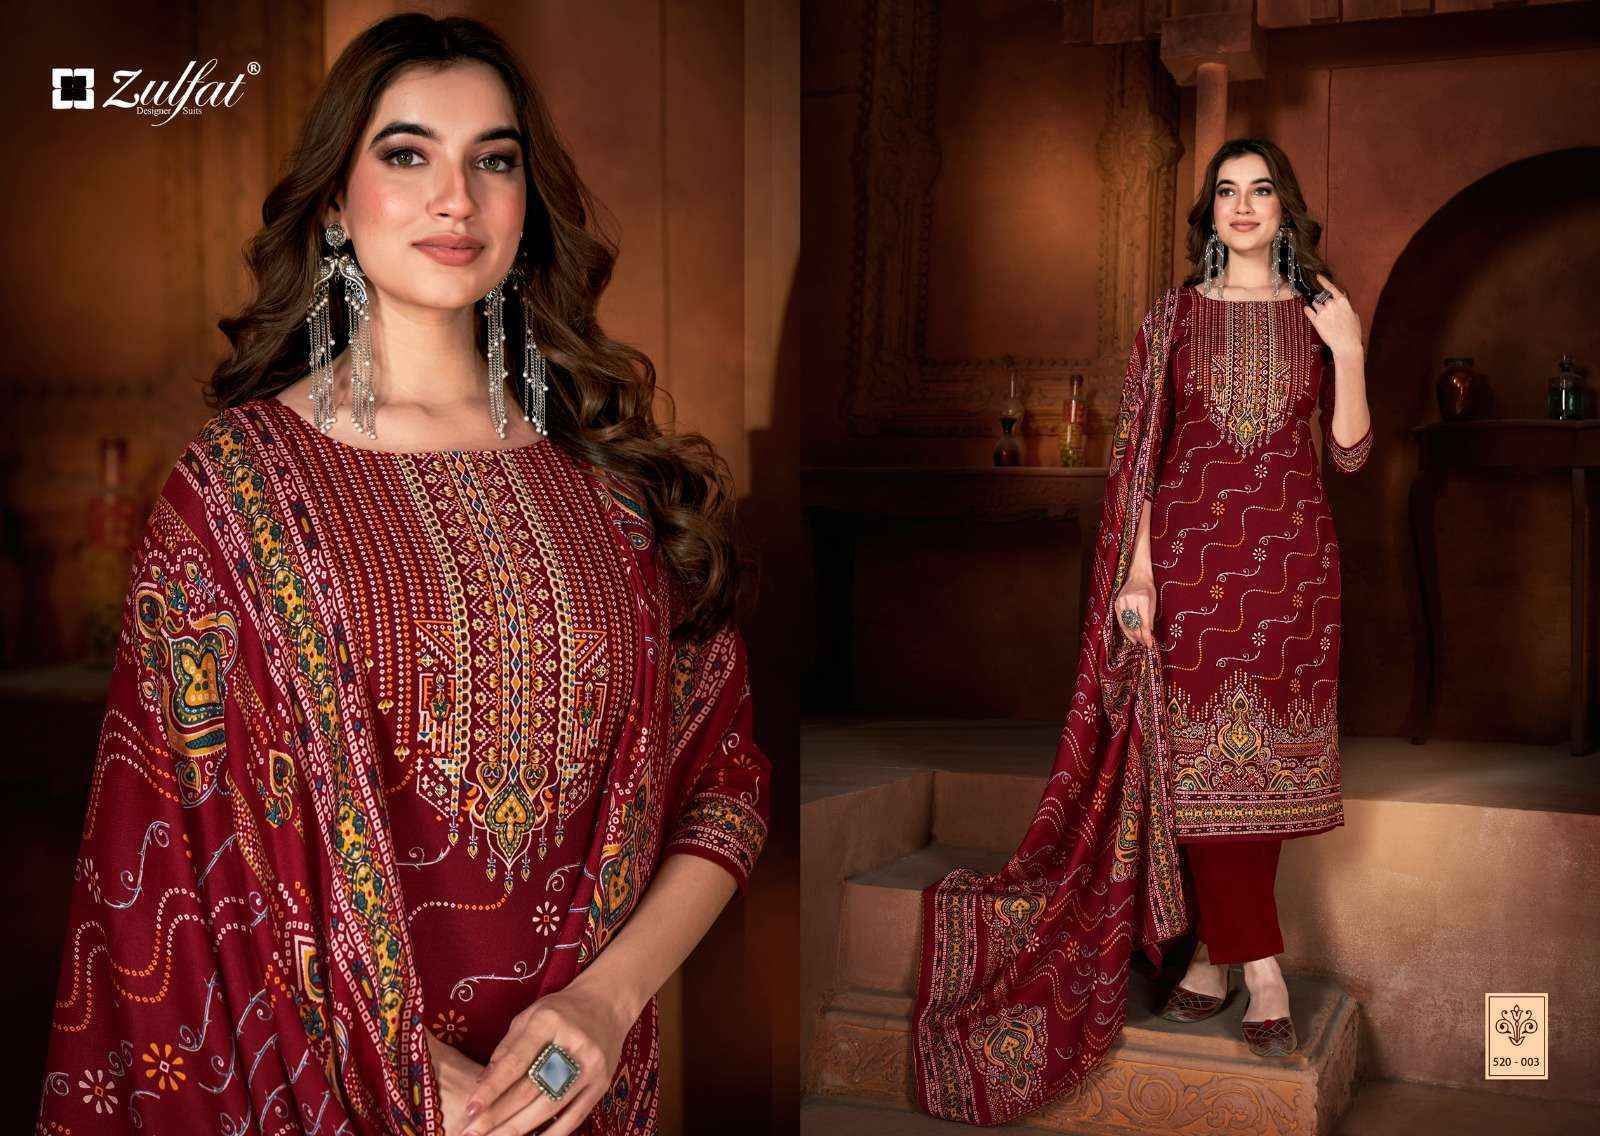 Zulfat Riyana Pashmina Dress Material 8 pcs Catalogue - Wholesale Factory